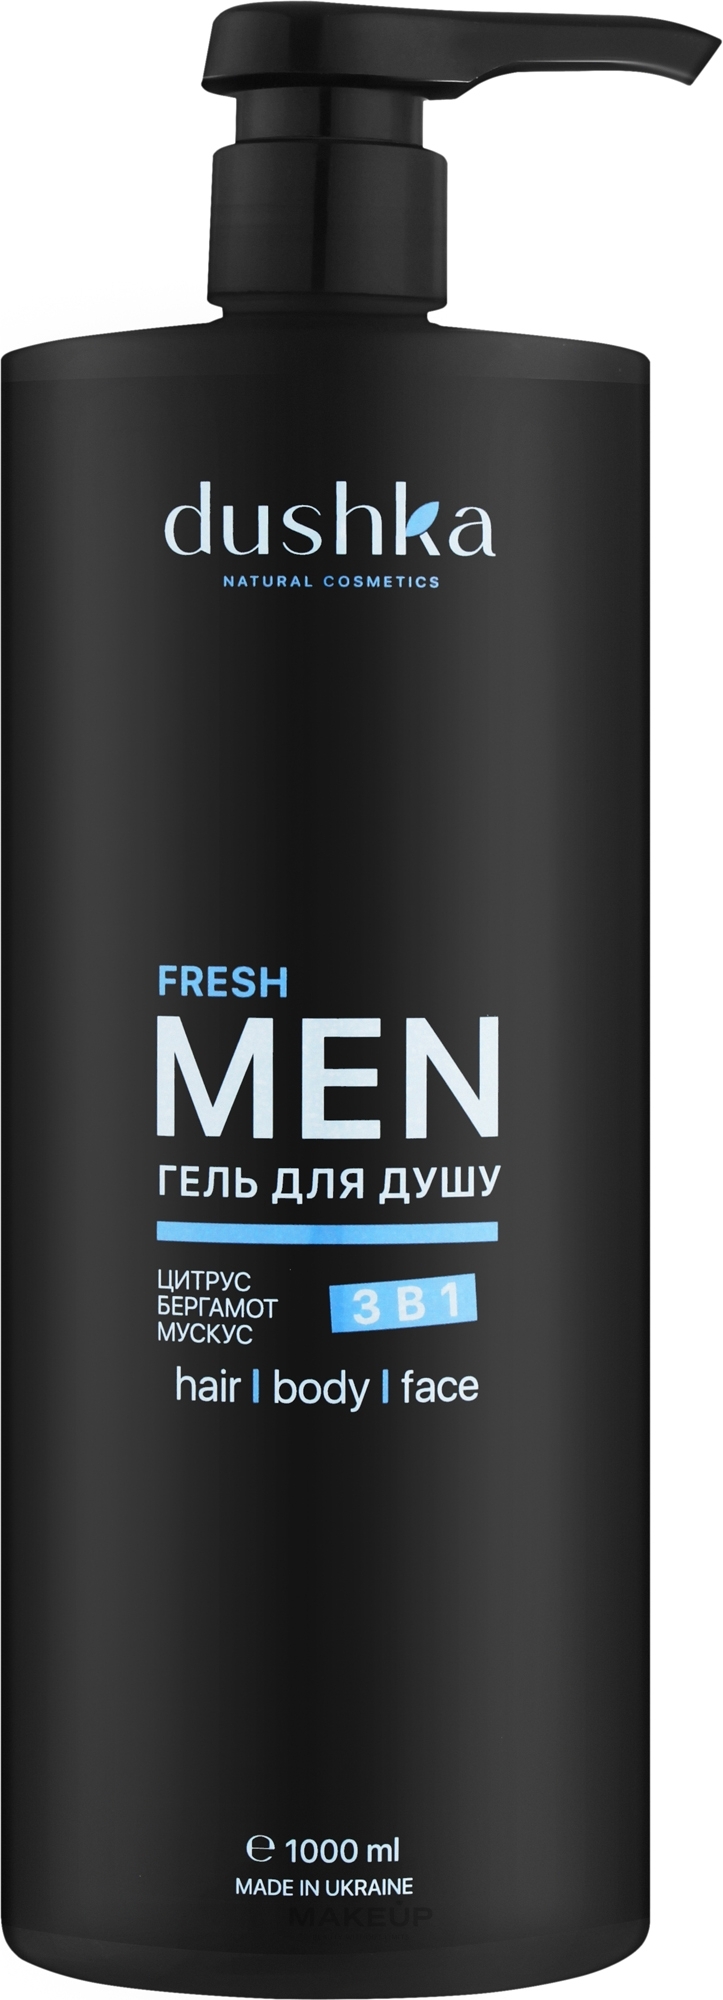 Мужской гель для душа 3 в 1 - Dushka Men Fresh 3in1 Shower Gel — фото 1000ml